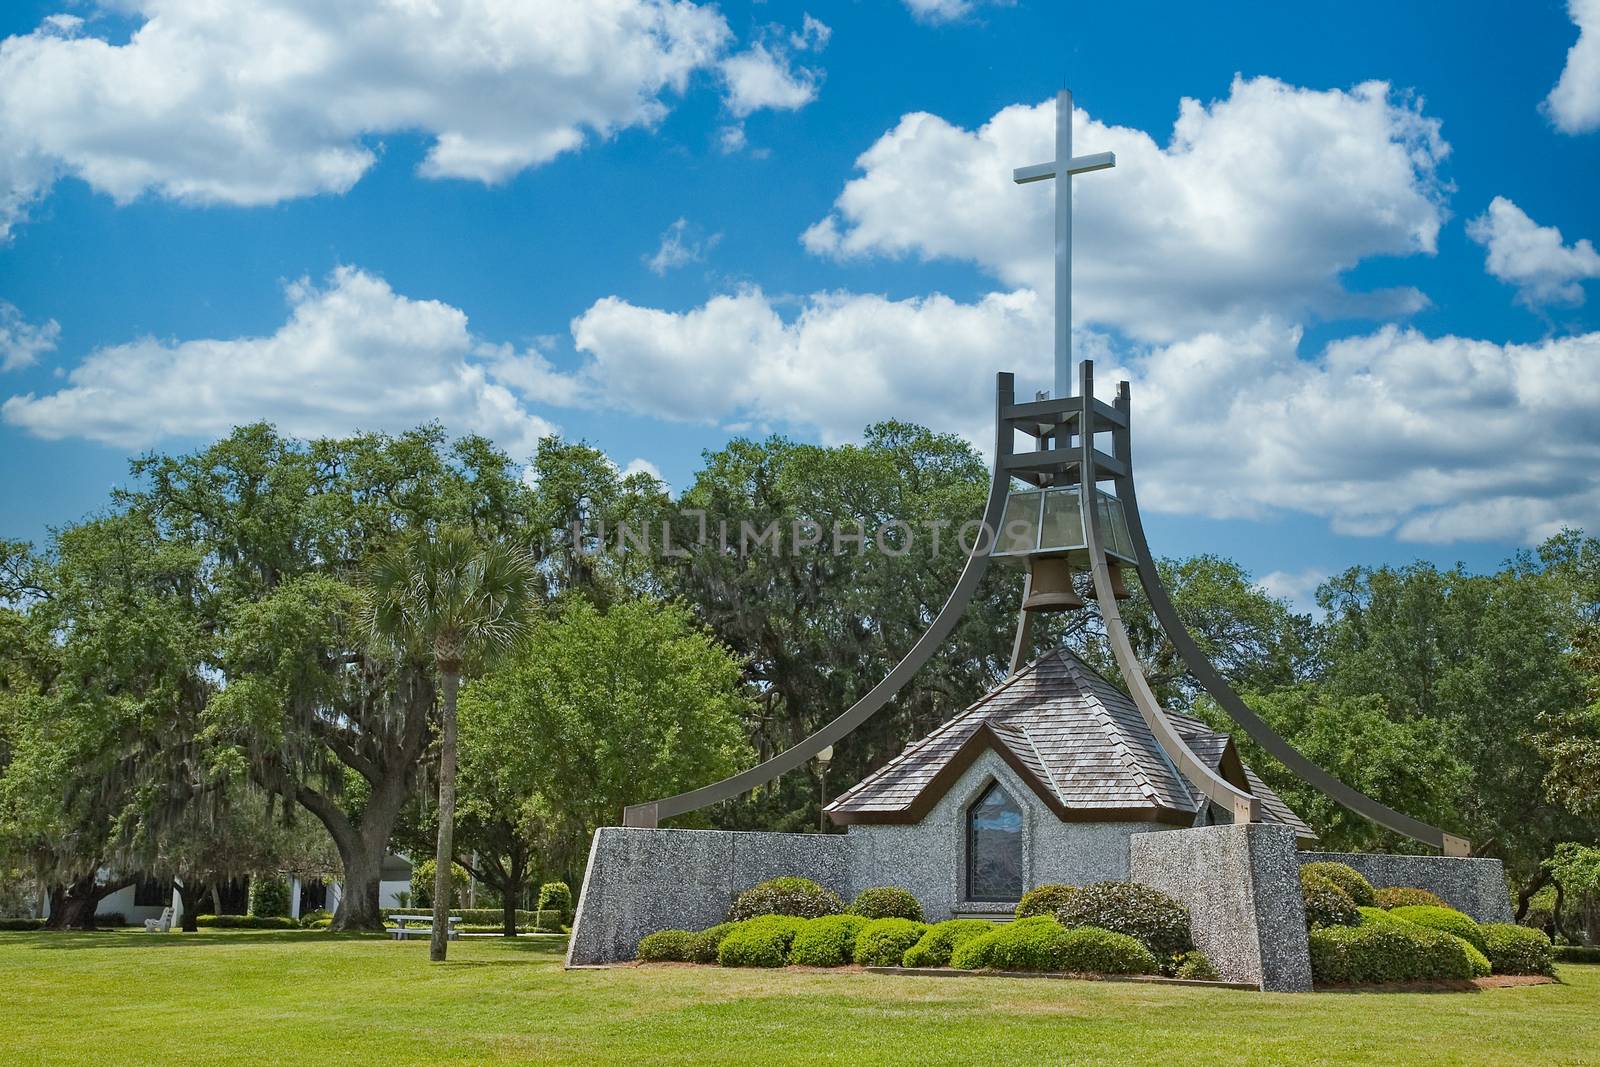 Church bells and a park at a public park